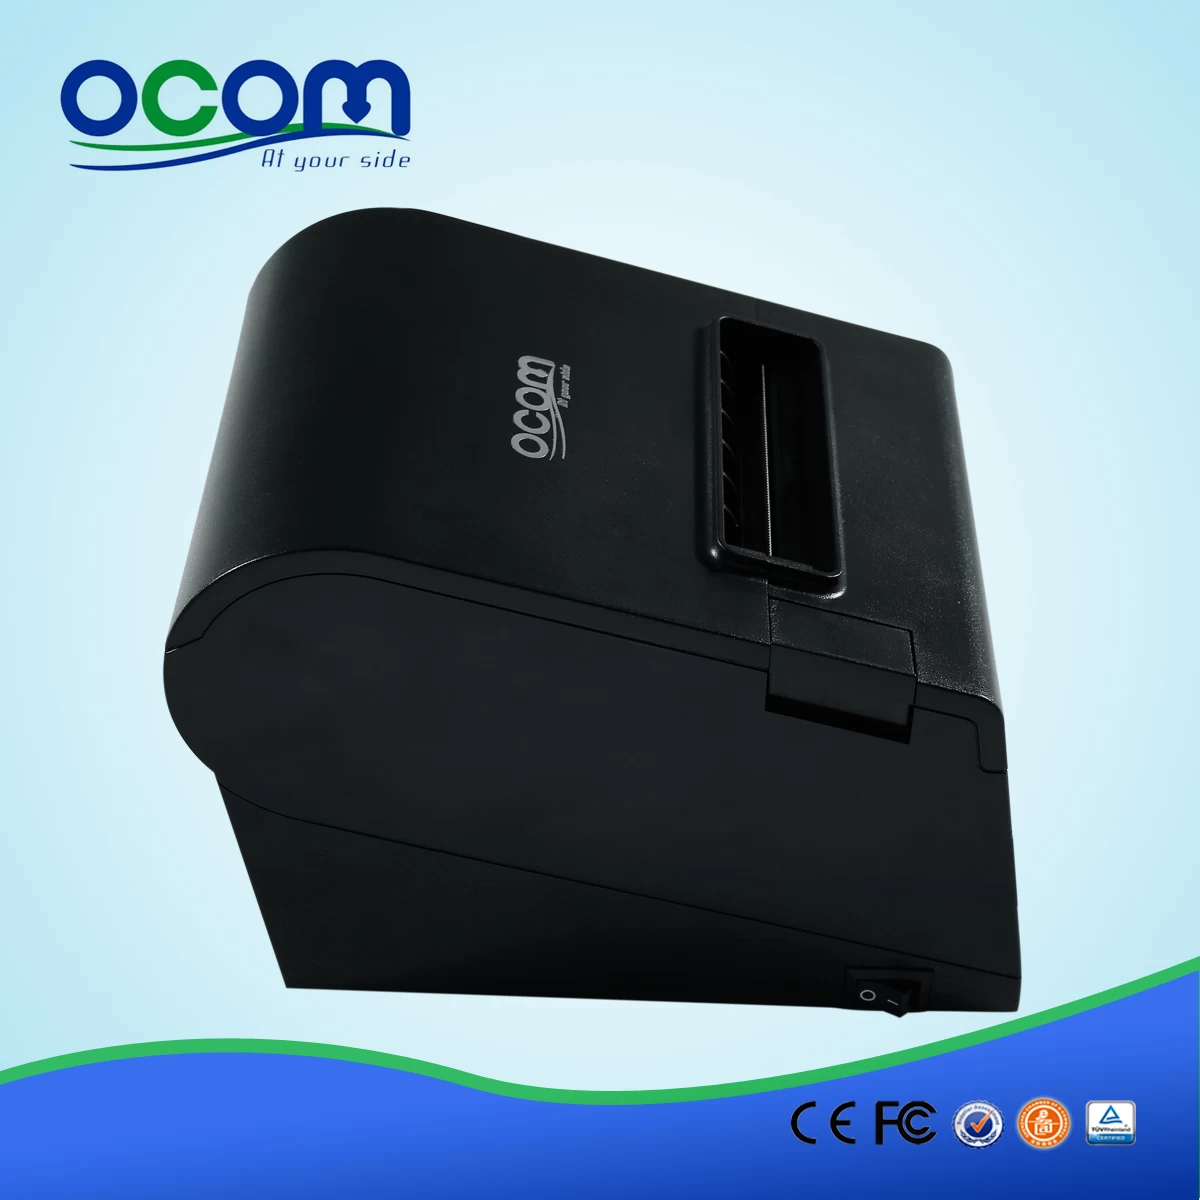 80mm auto autter POS receipt printer-OCPP-804